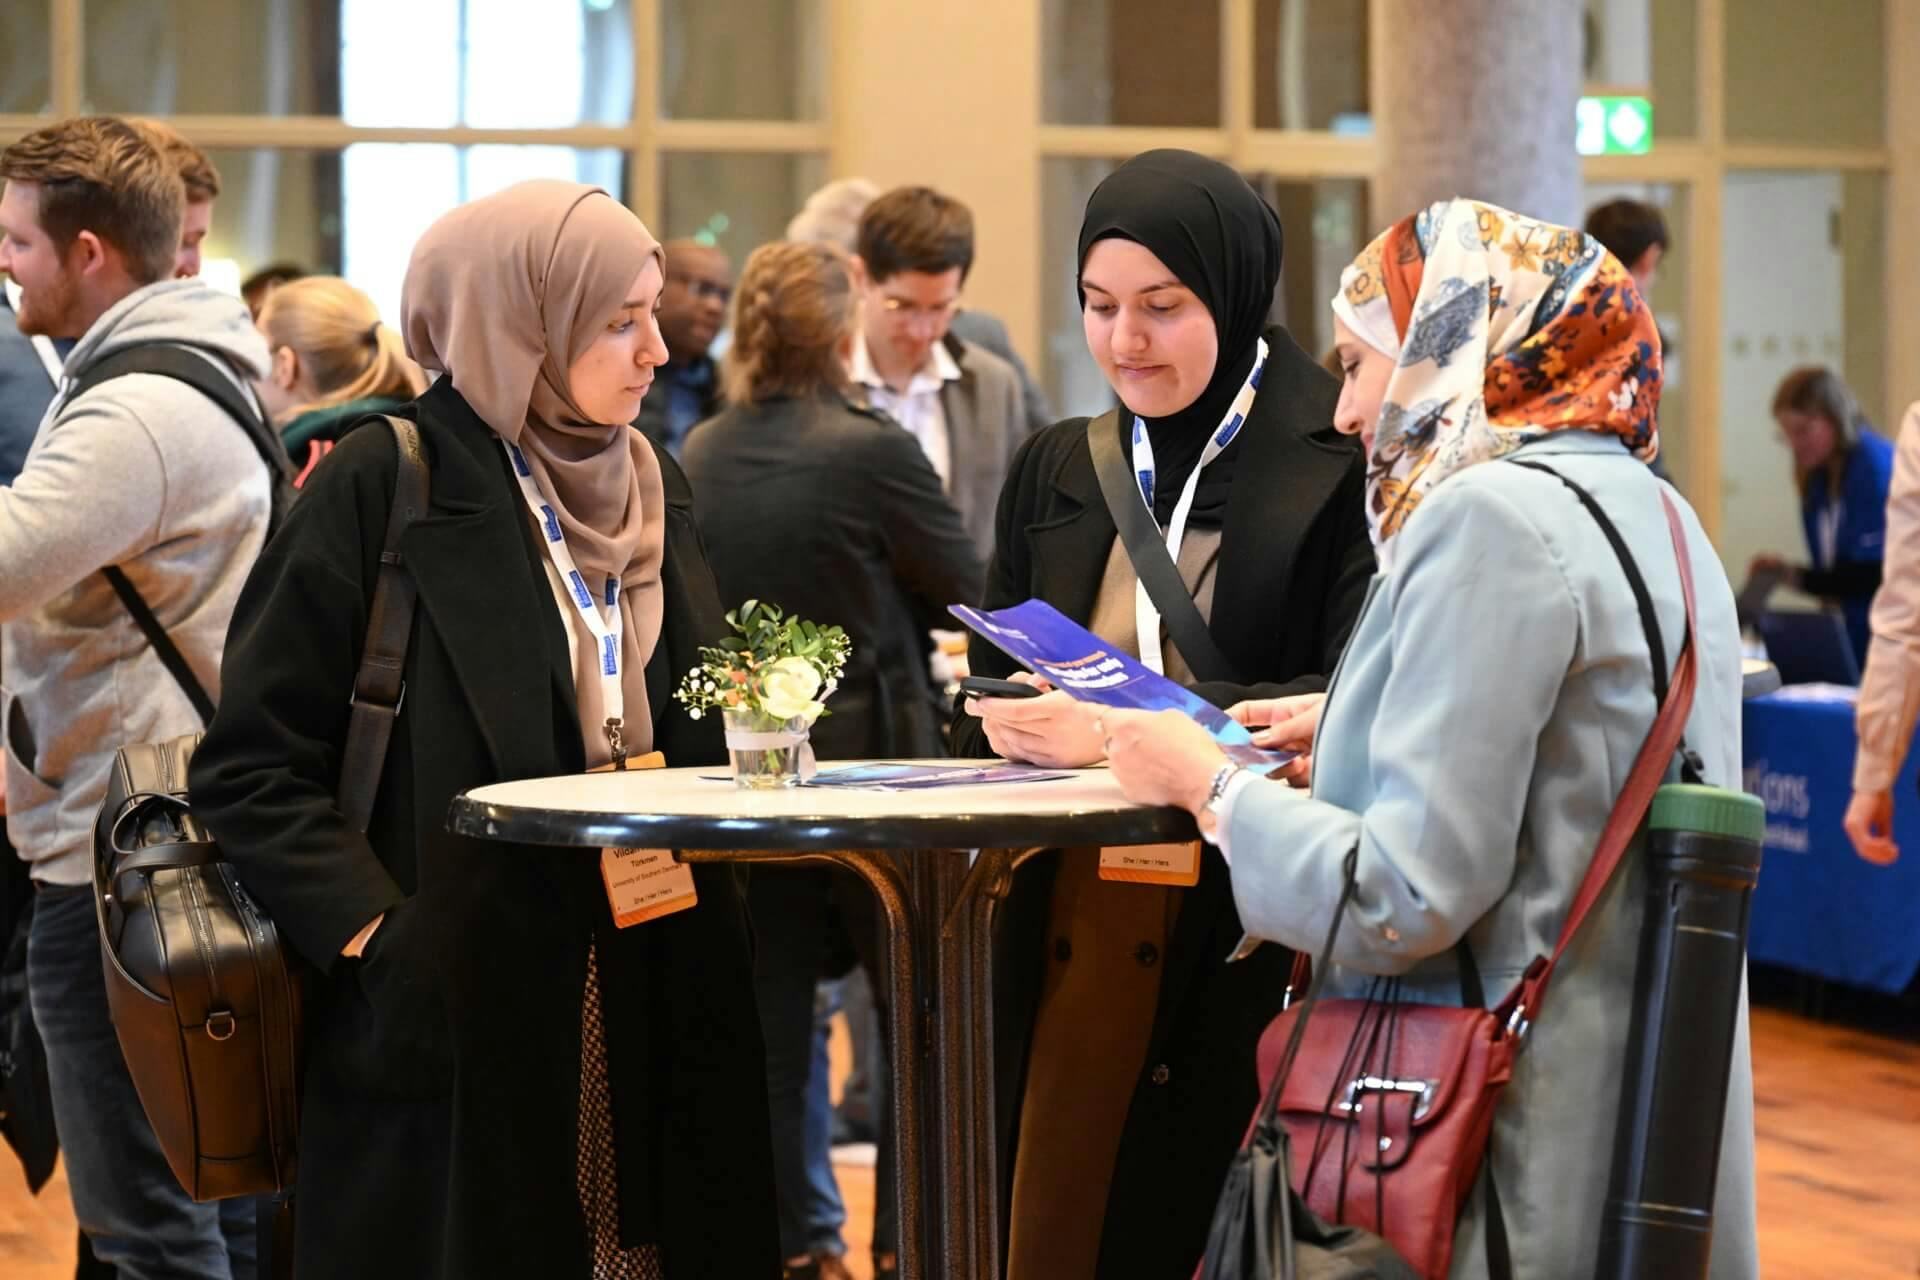 Attendees at the Bonn Symposium